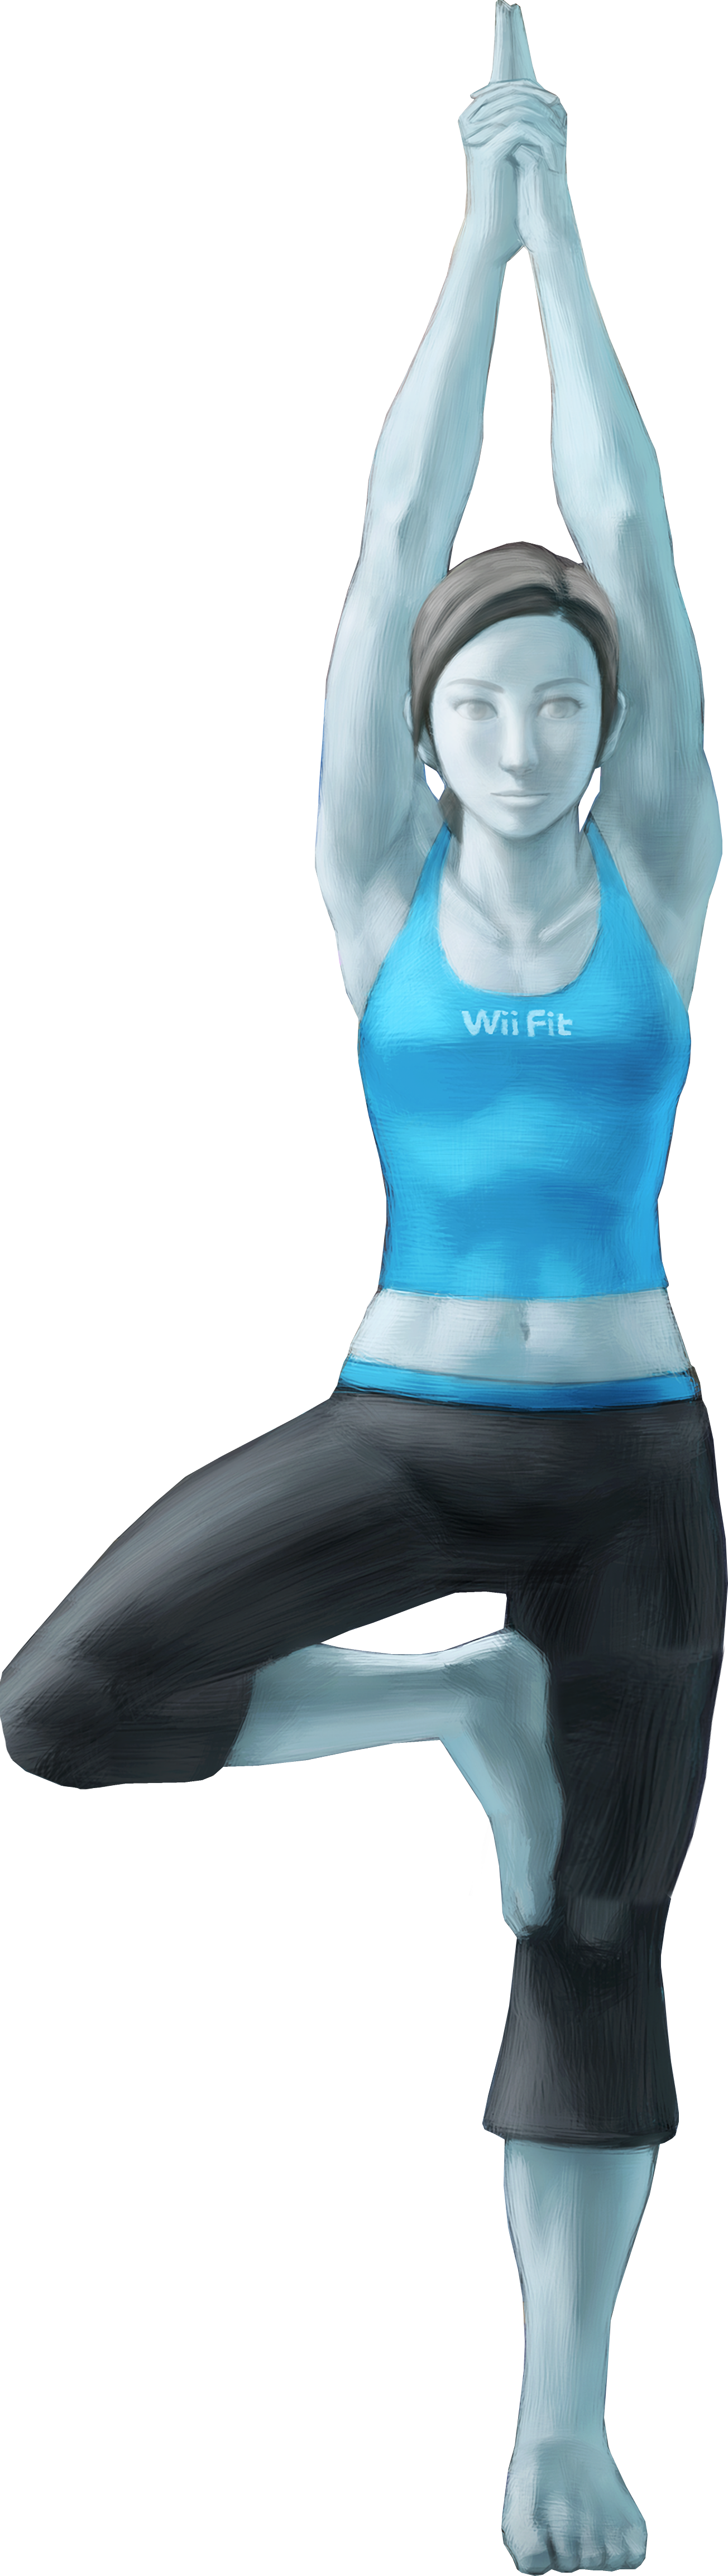 47 Wii Fit Trainer (Patched) - SSBU by ElevenZM on DeviantArt